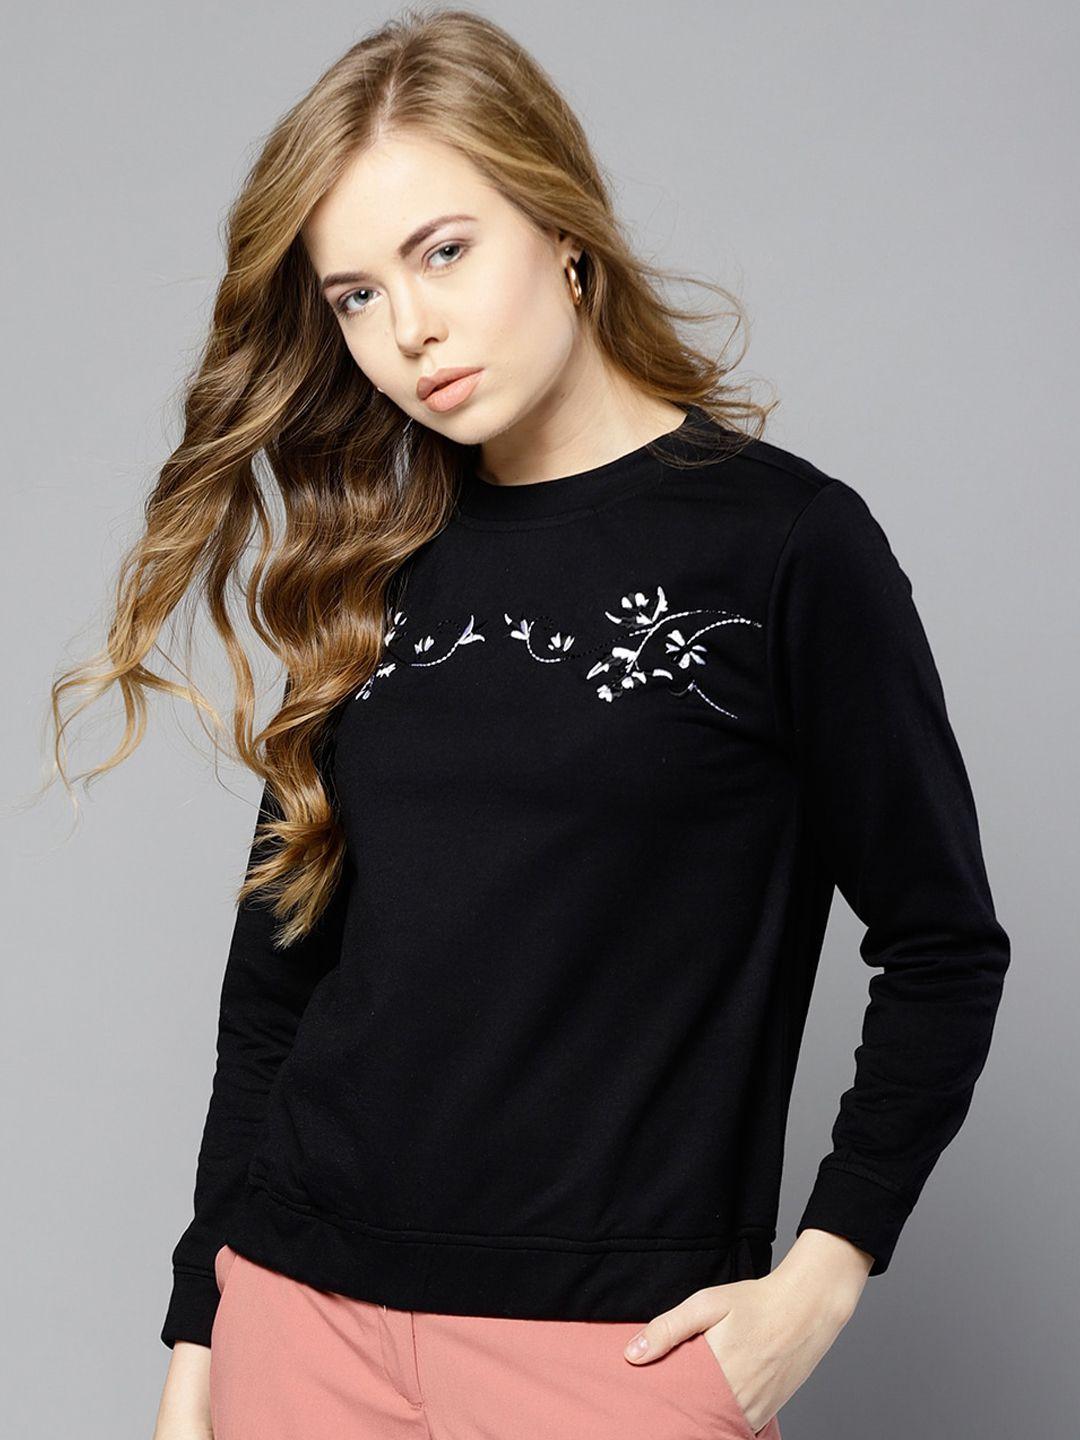 carlton london women black solid sweatshirt